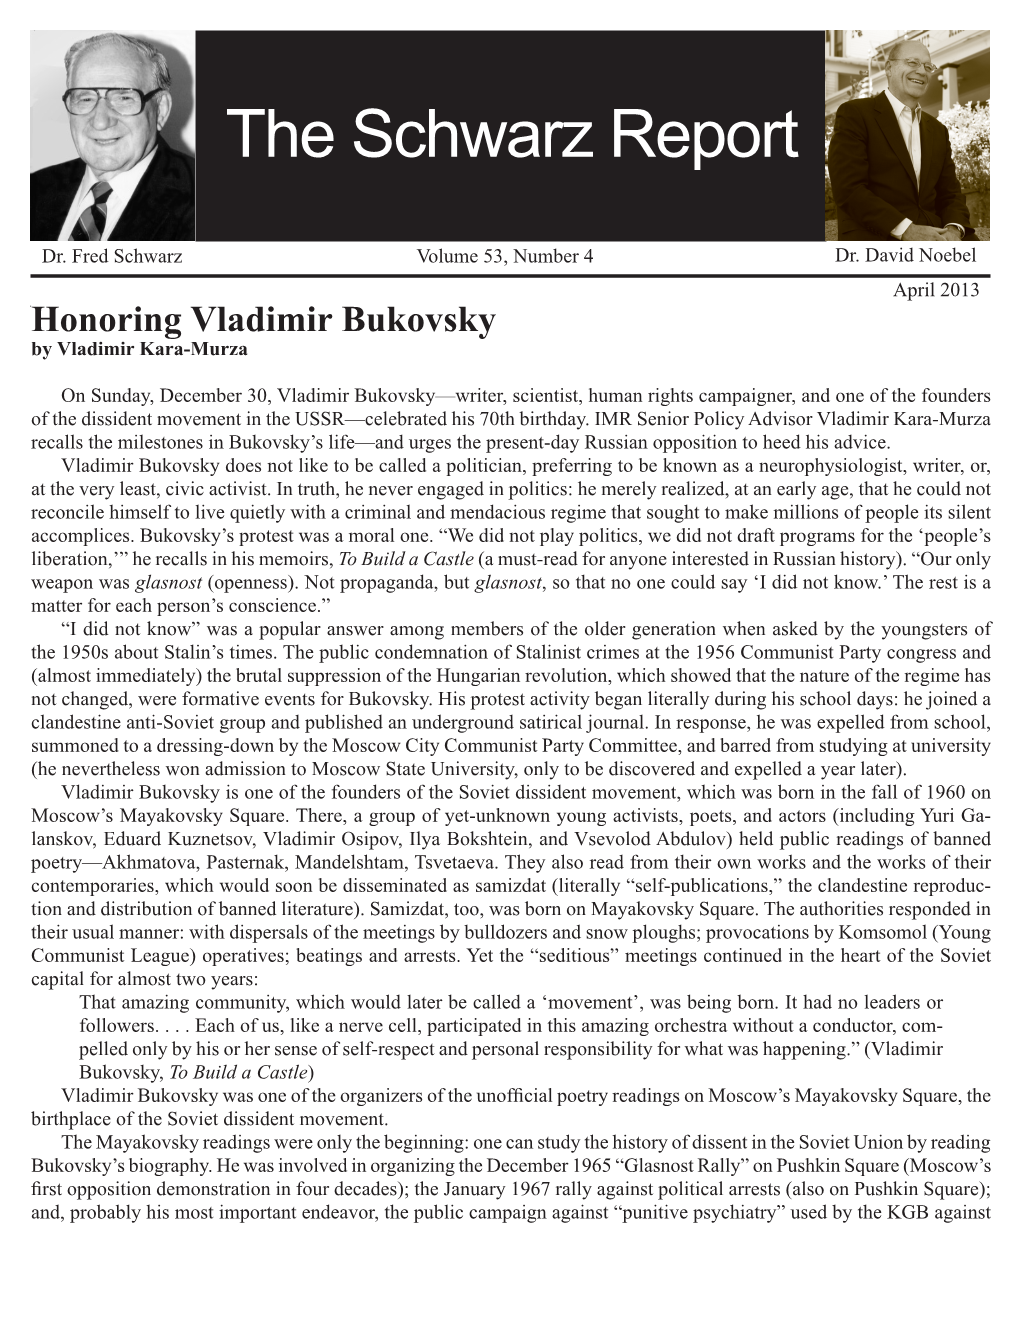 Honoring Vladimir Bukovsky by Vladimir Kara-Murza